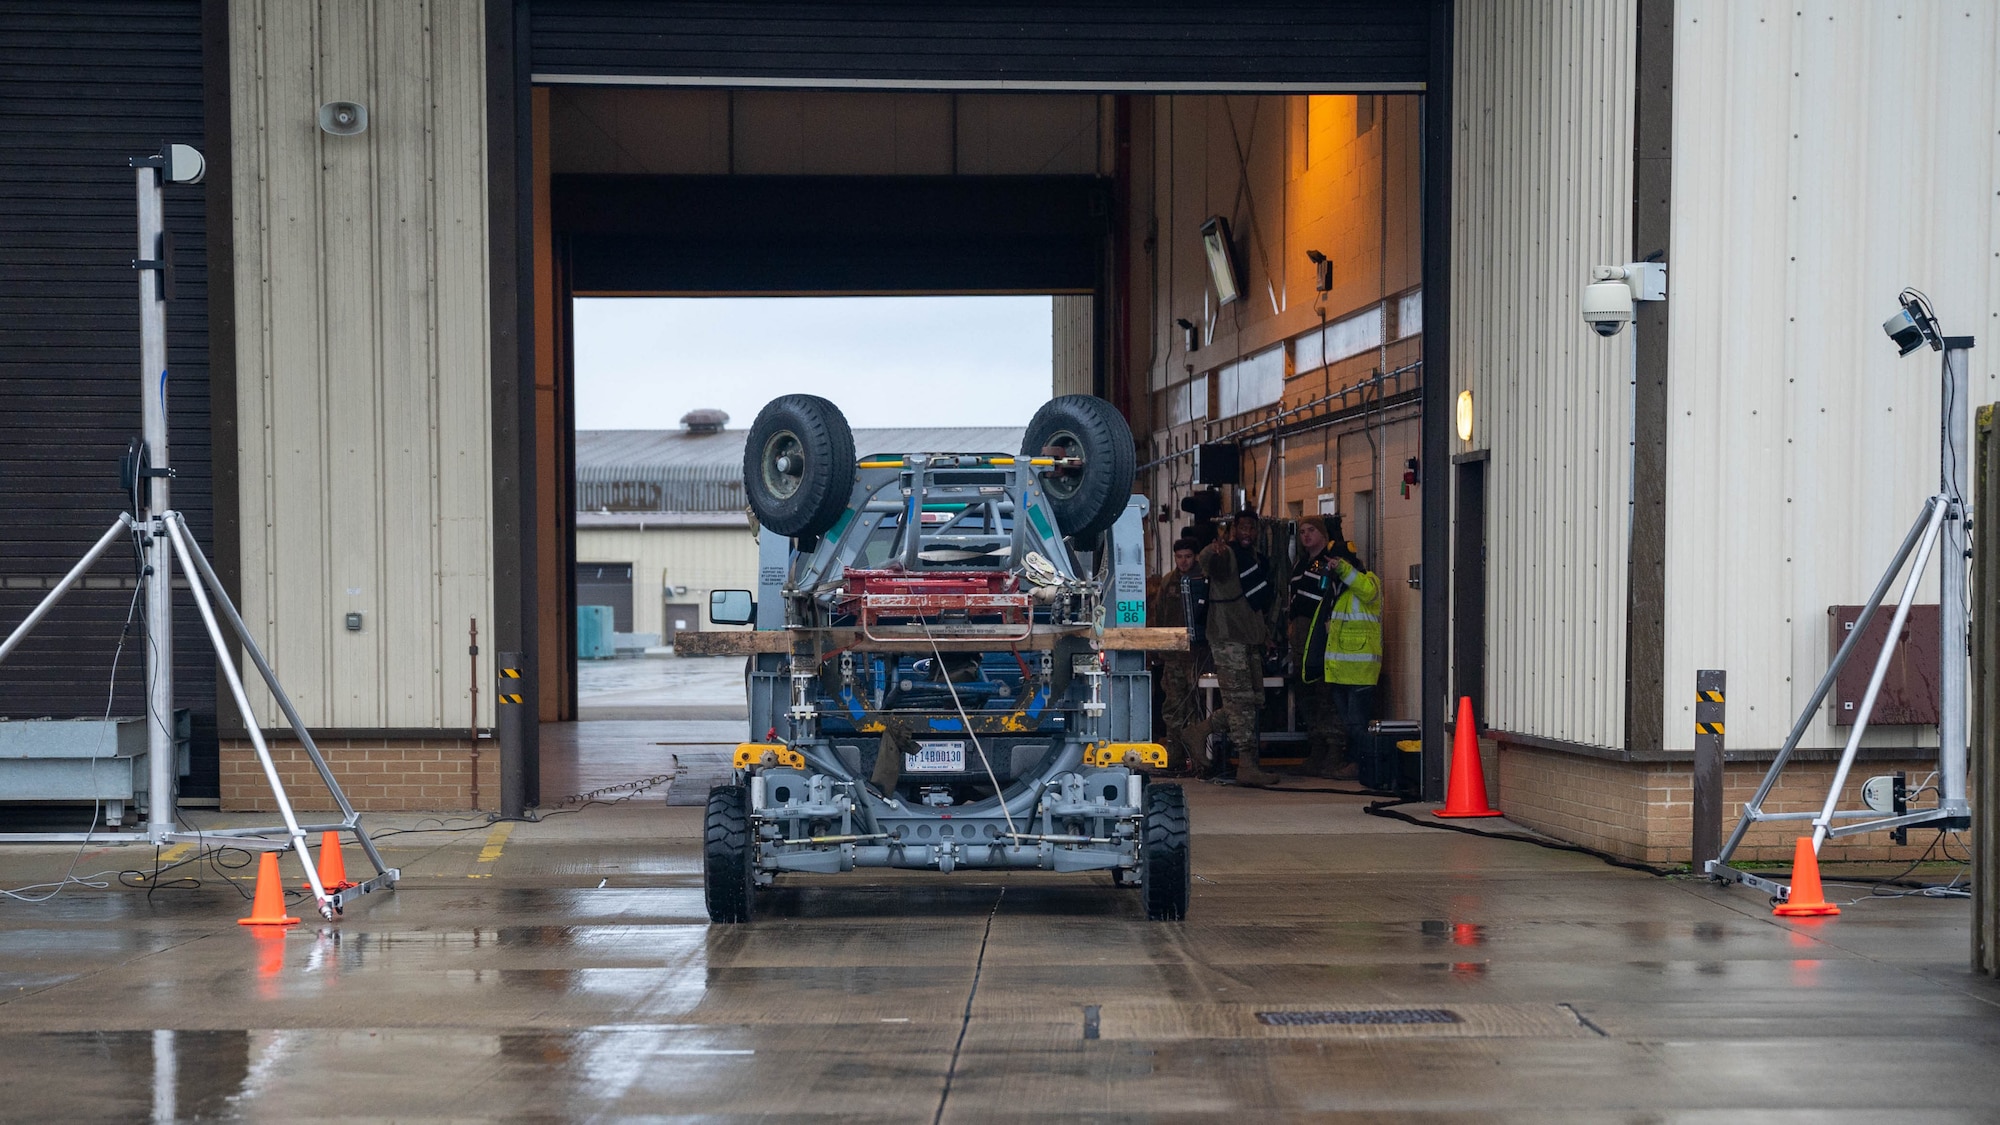 A vehicle drives through a hangar on a military installation